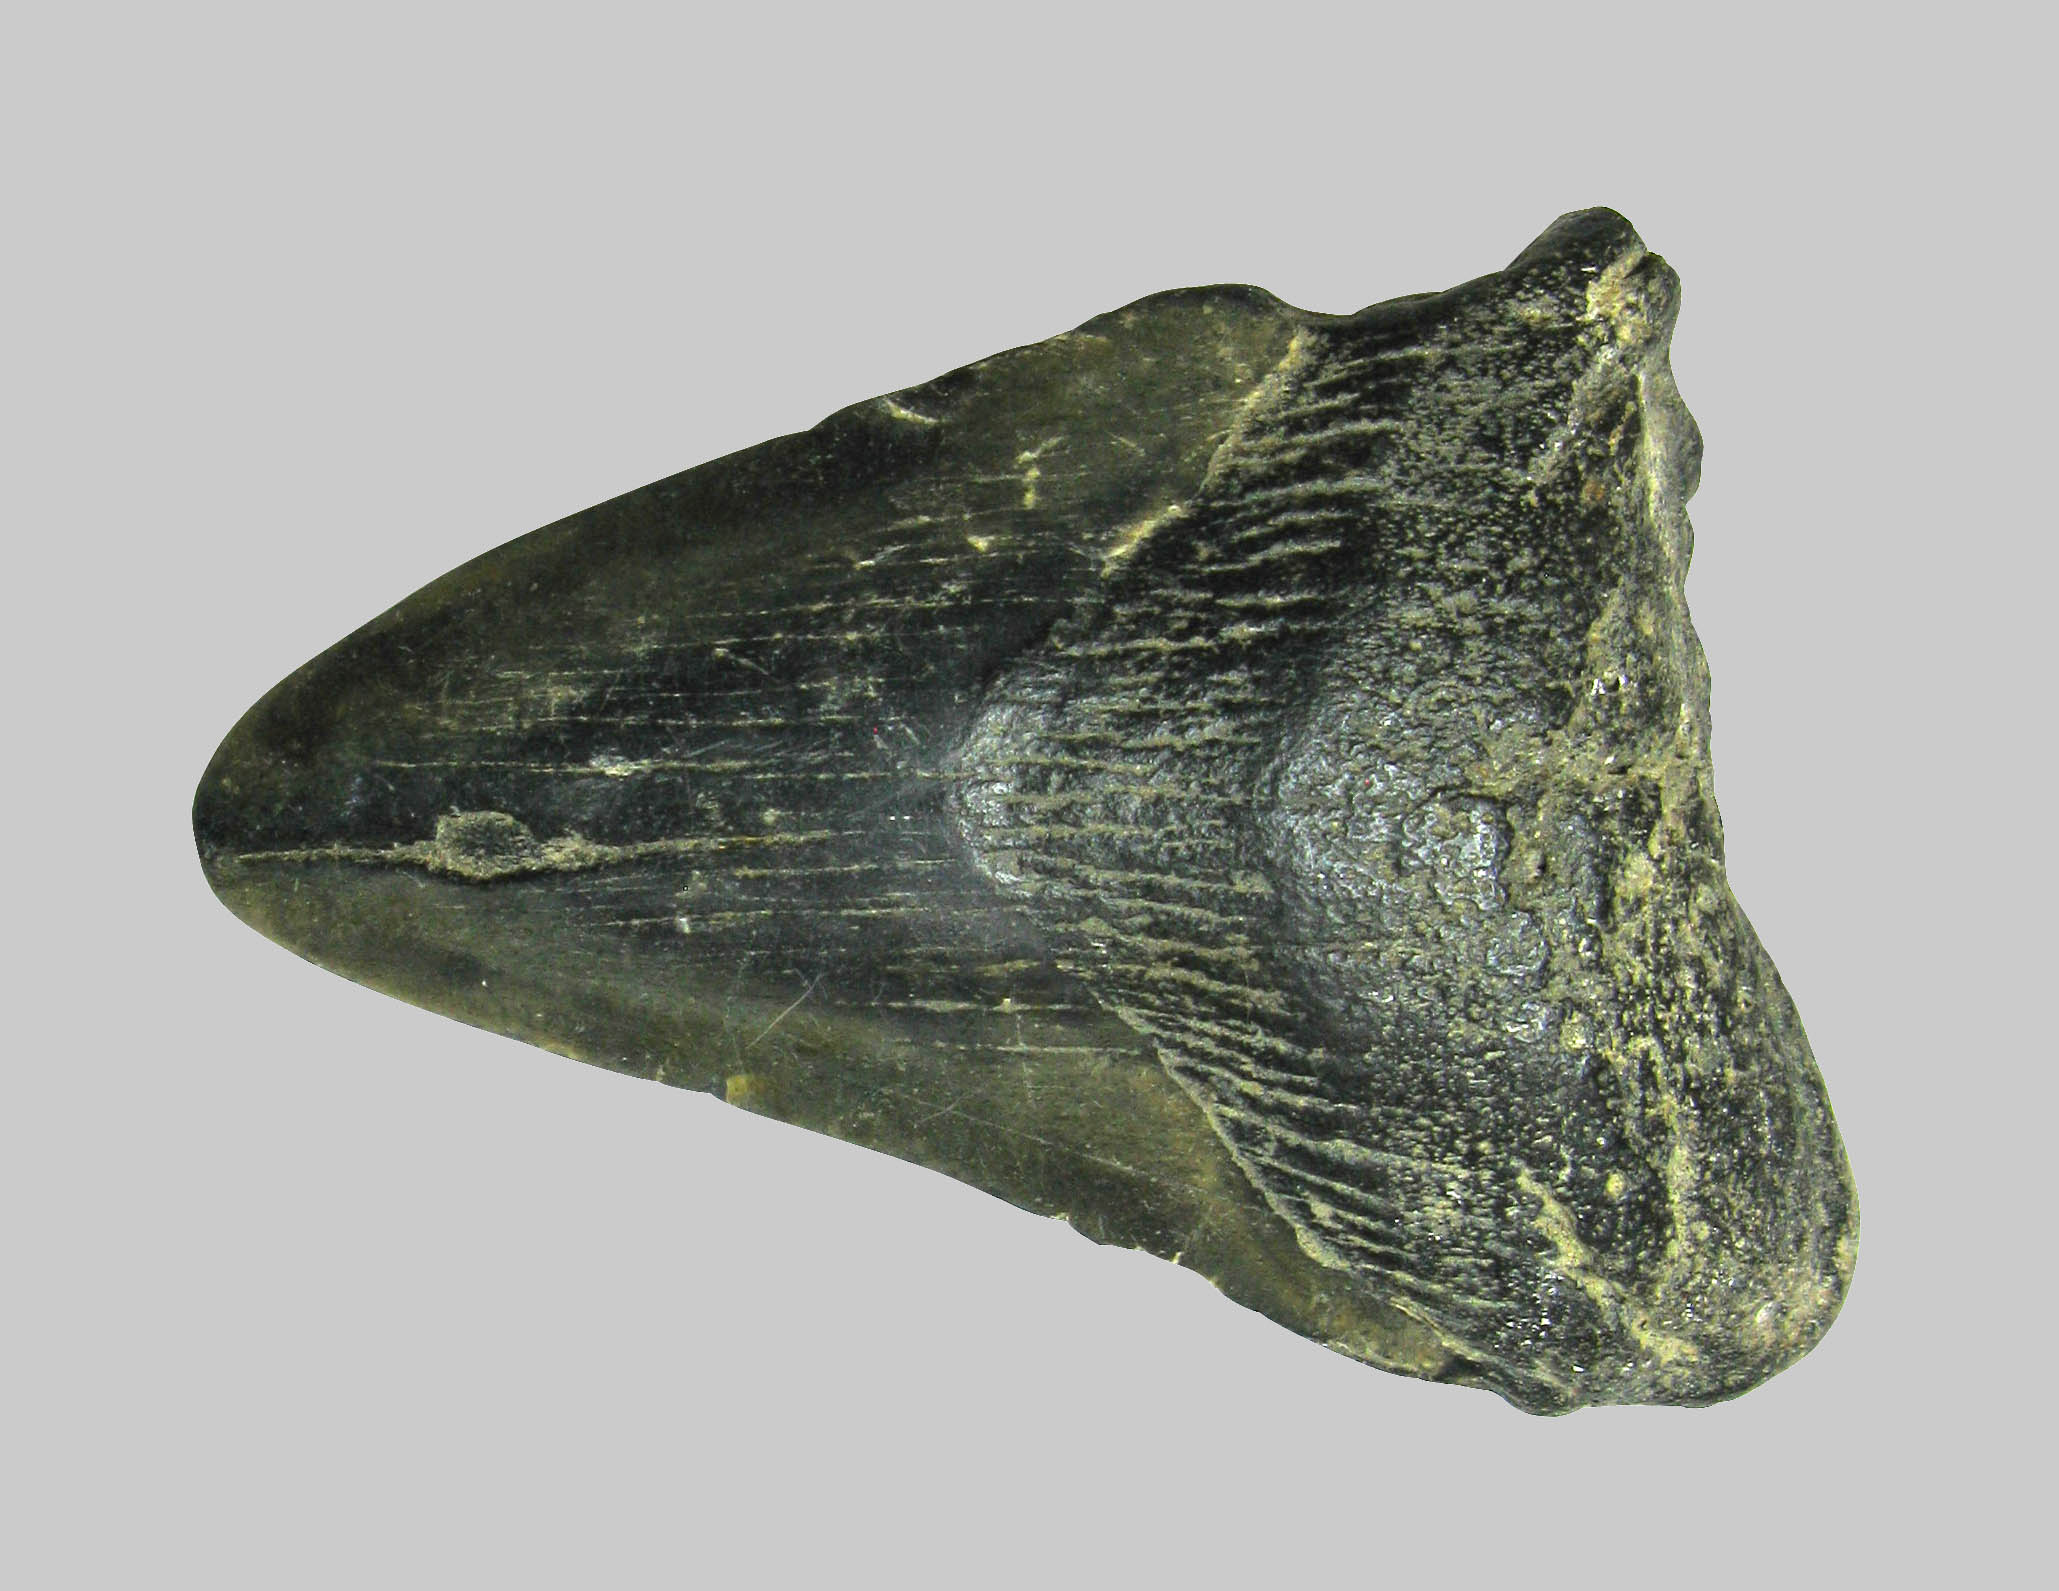 Megalodon (Carcharocles megalodon) Teeth